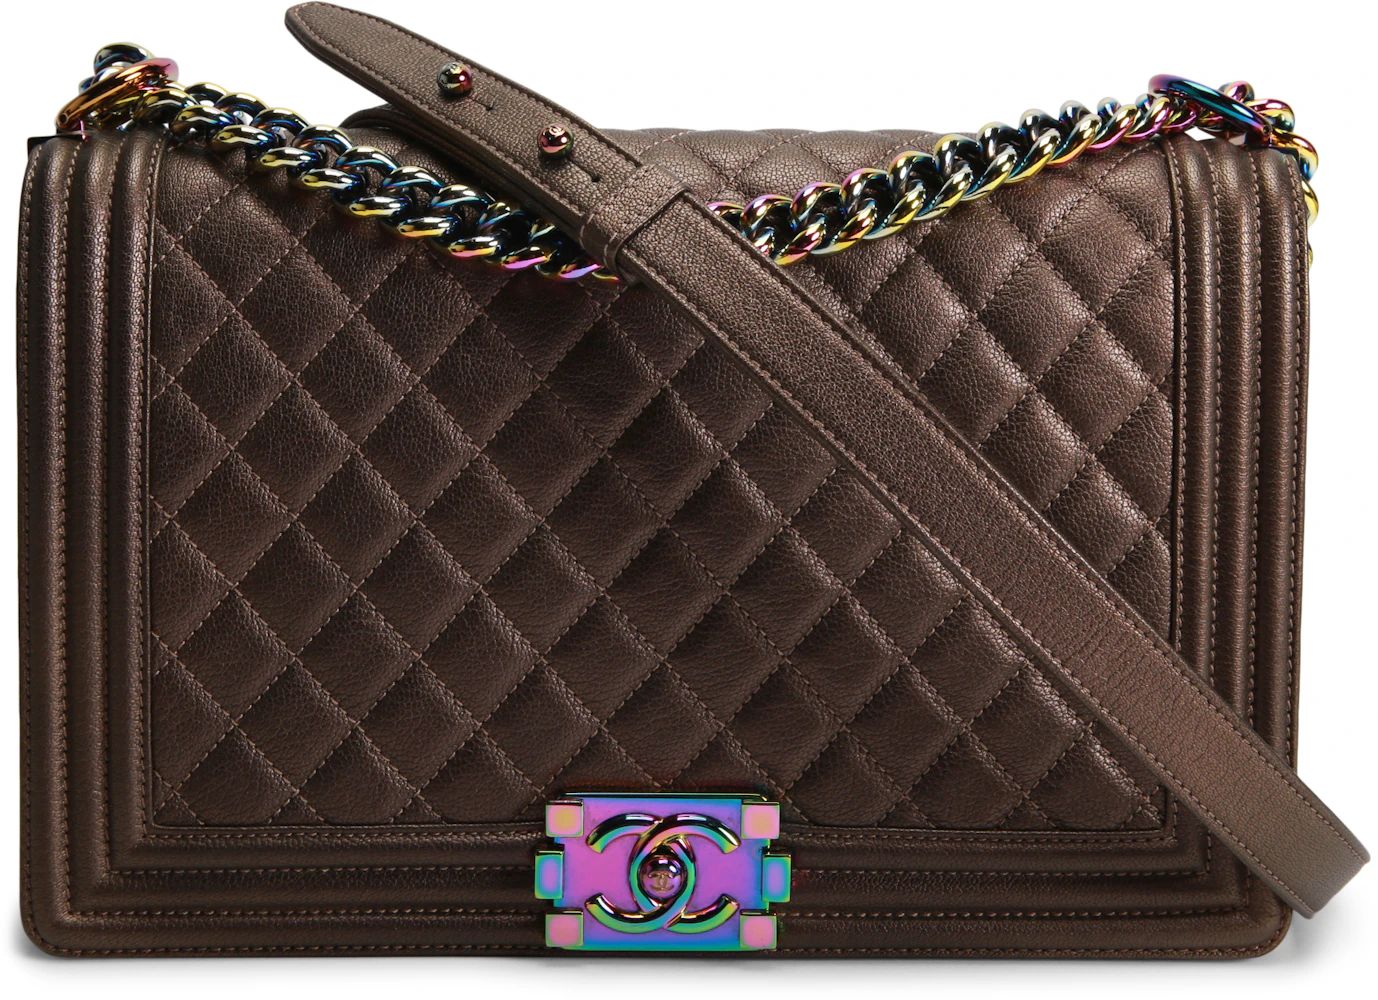 Chanel Classic Double Flap Bag Quilted Iridescent Goatskin Medium Metallic  2253573